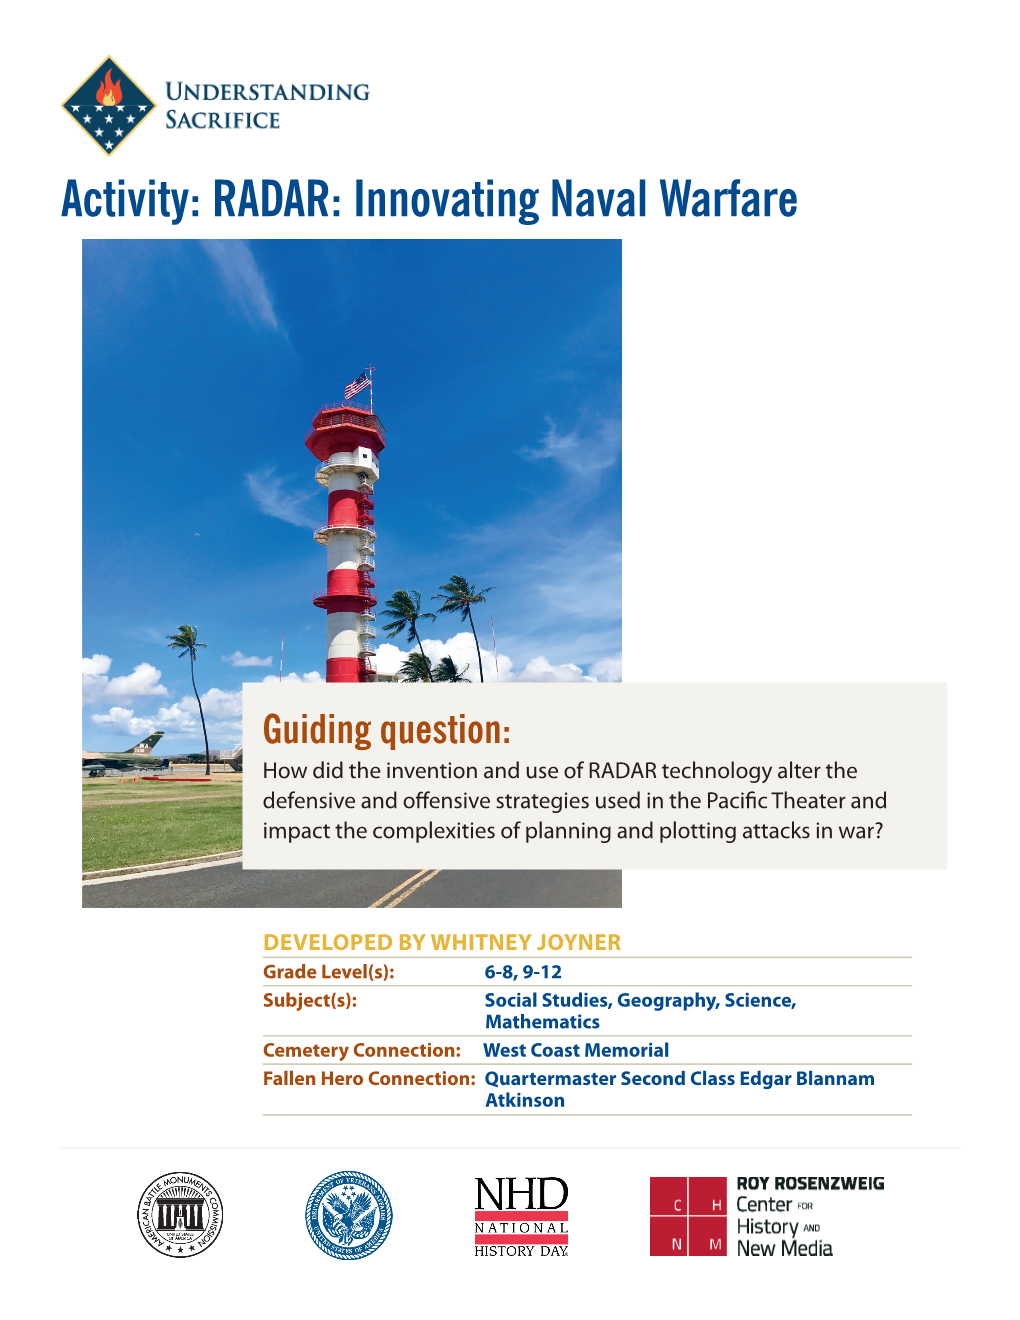 RADAR: Innovating Naval Warfare